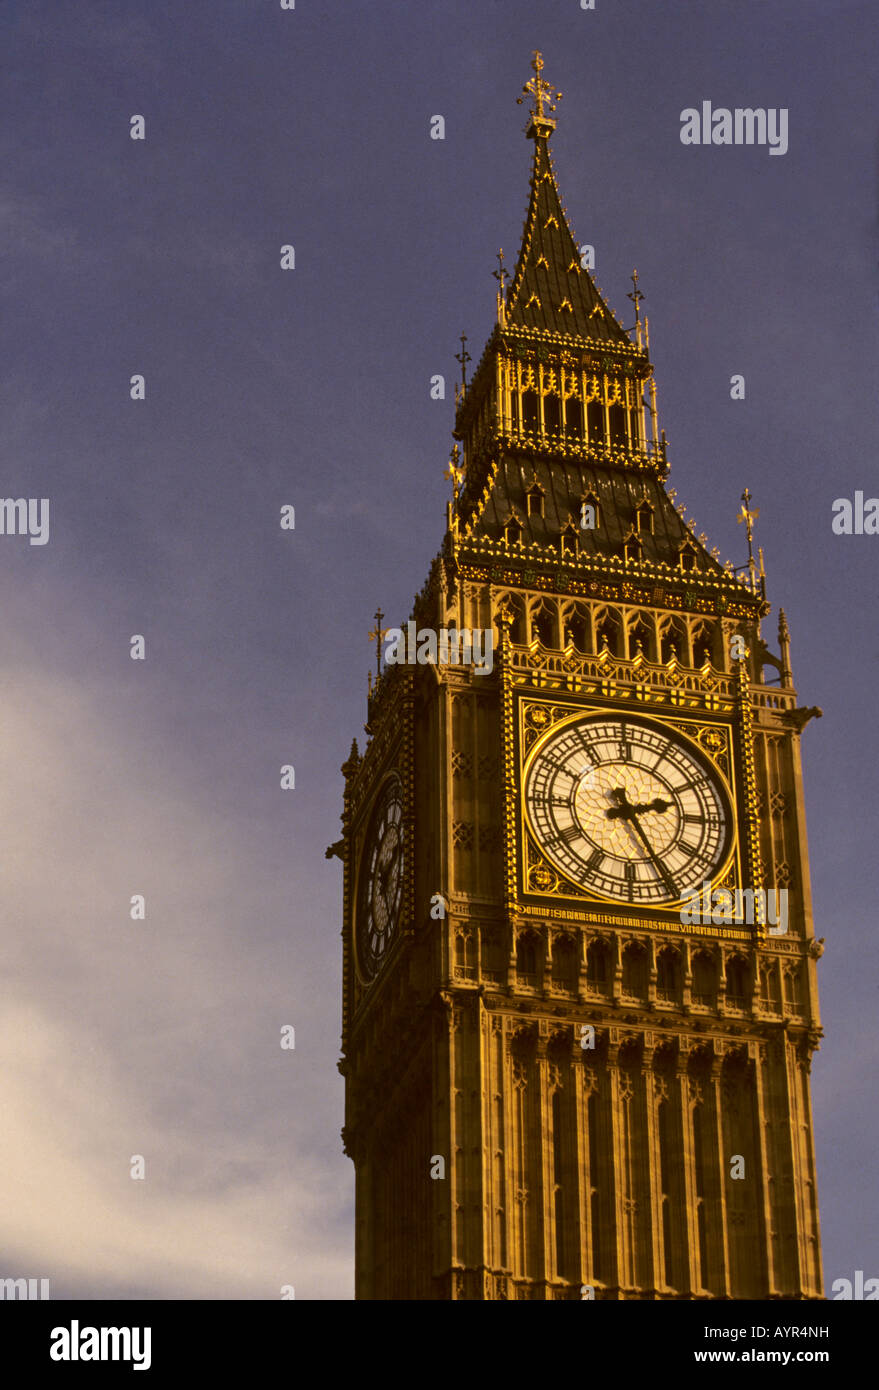 Tour de l'horloge, Big Ben, London, England, UK Banque D'Images